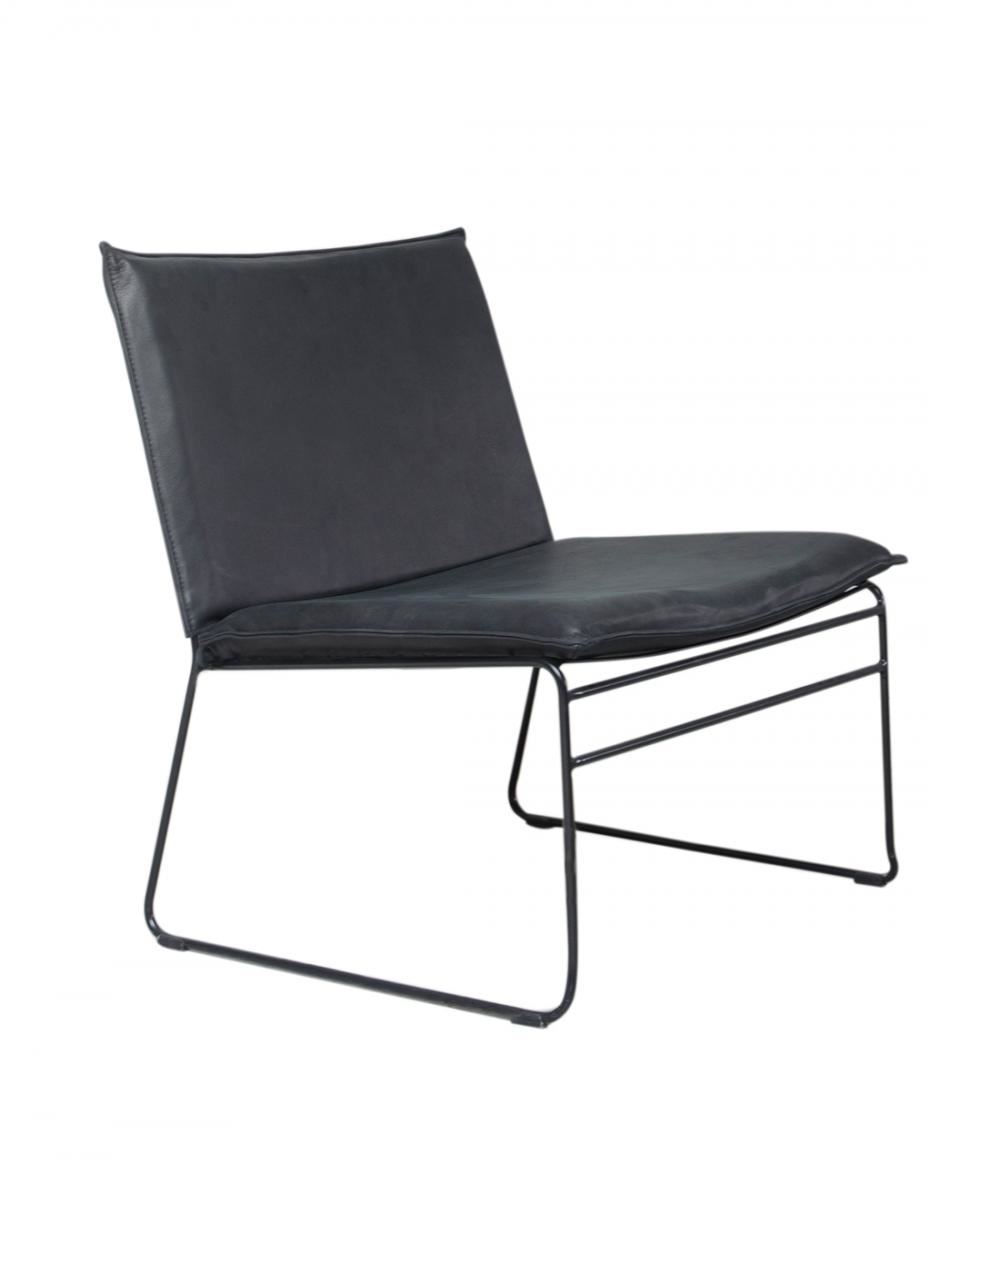 Kyst Lounge Chair Outdoor Lounge Chair With Black Cushion Ottoman Black Cushion